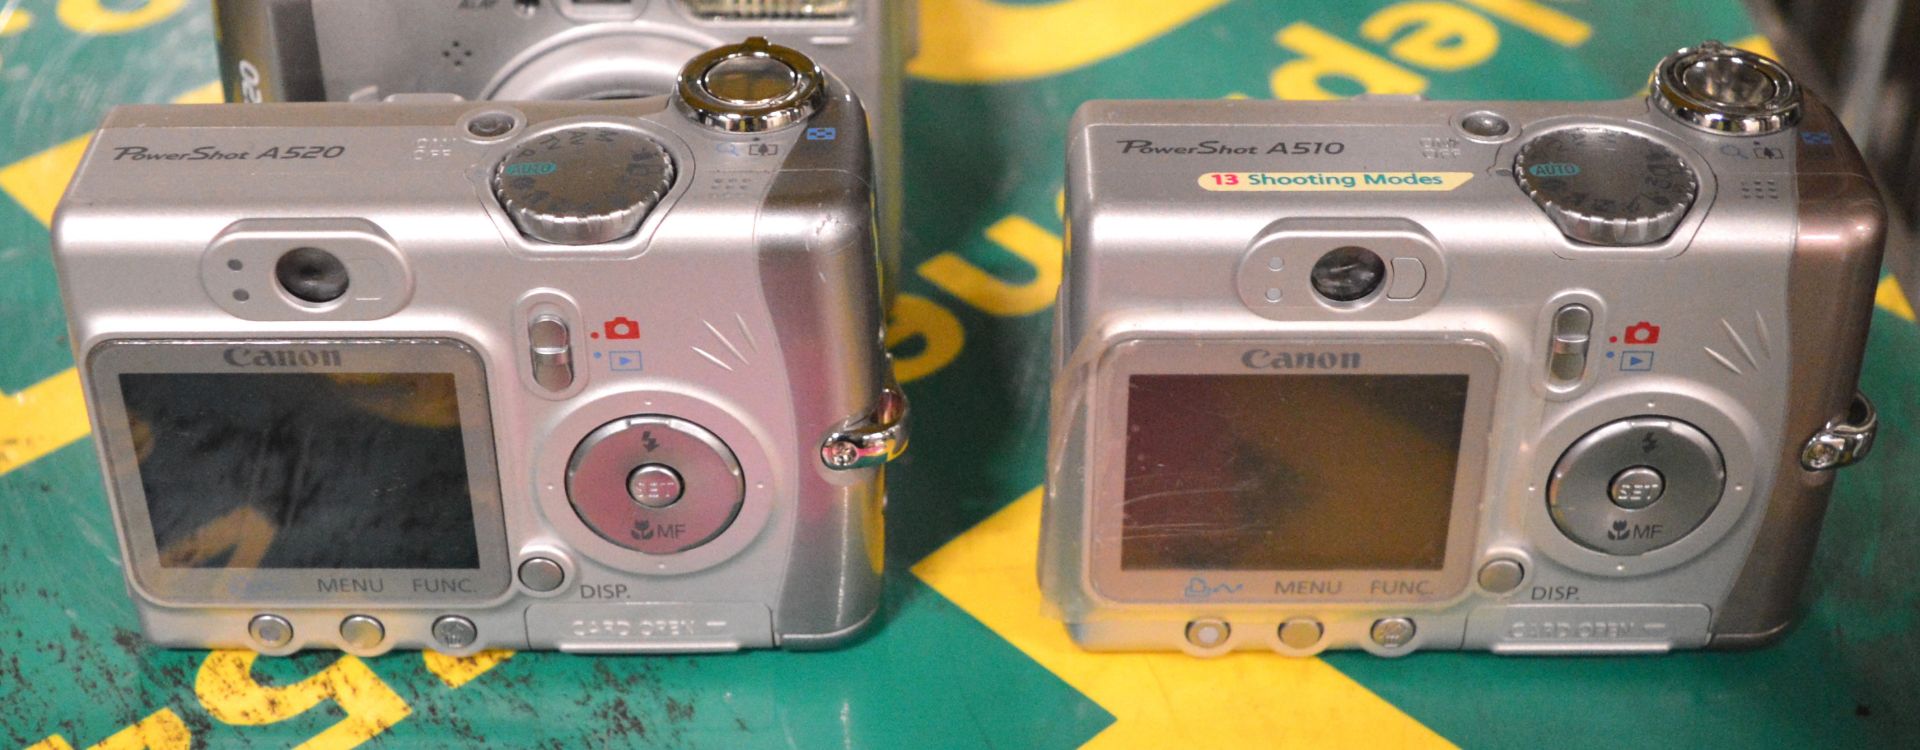 4x Canon PowerShot A520 Digital Cameras, 1x Canon PowerShot A510 Digital Camera - Tested & Working. - Image 2 of 2